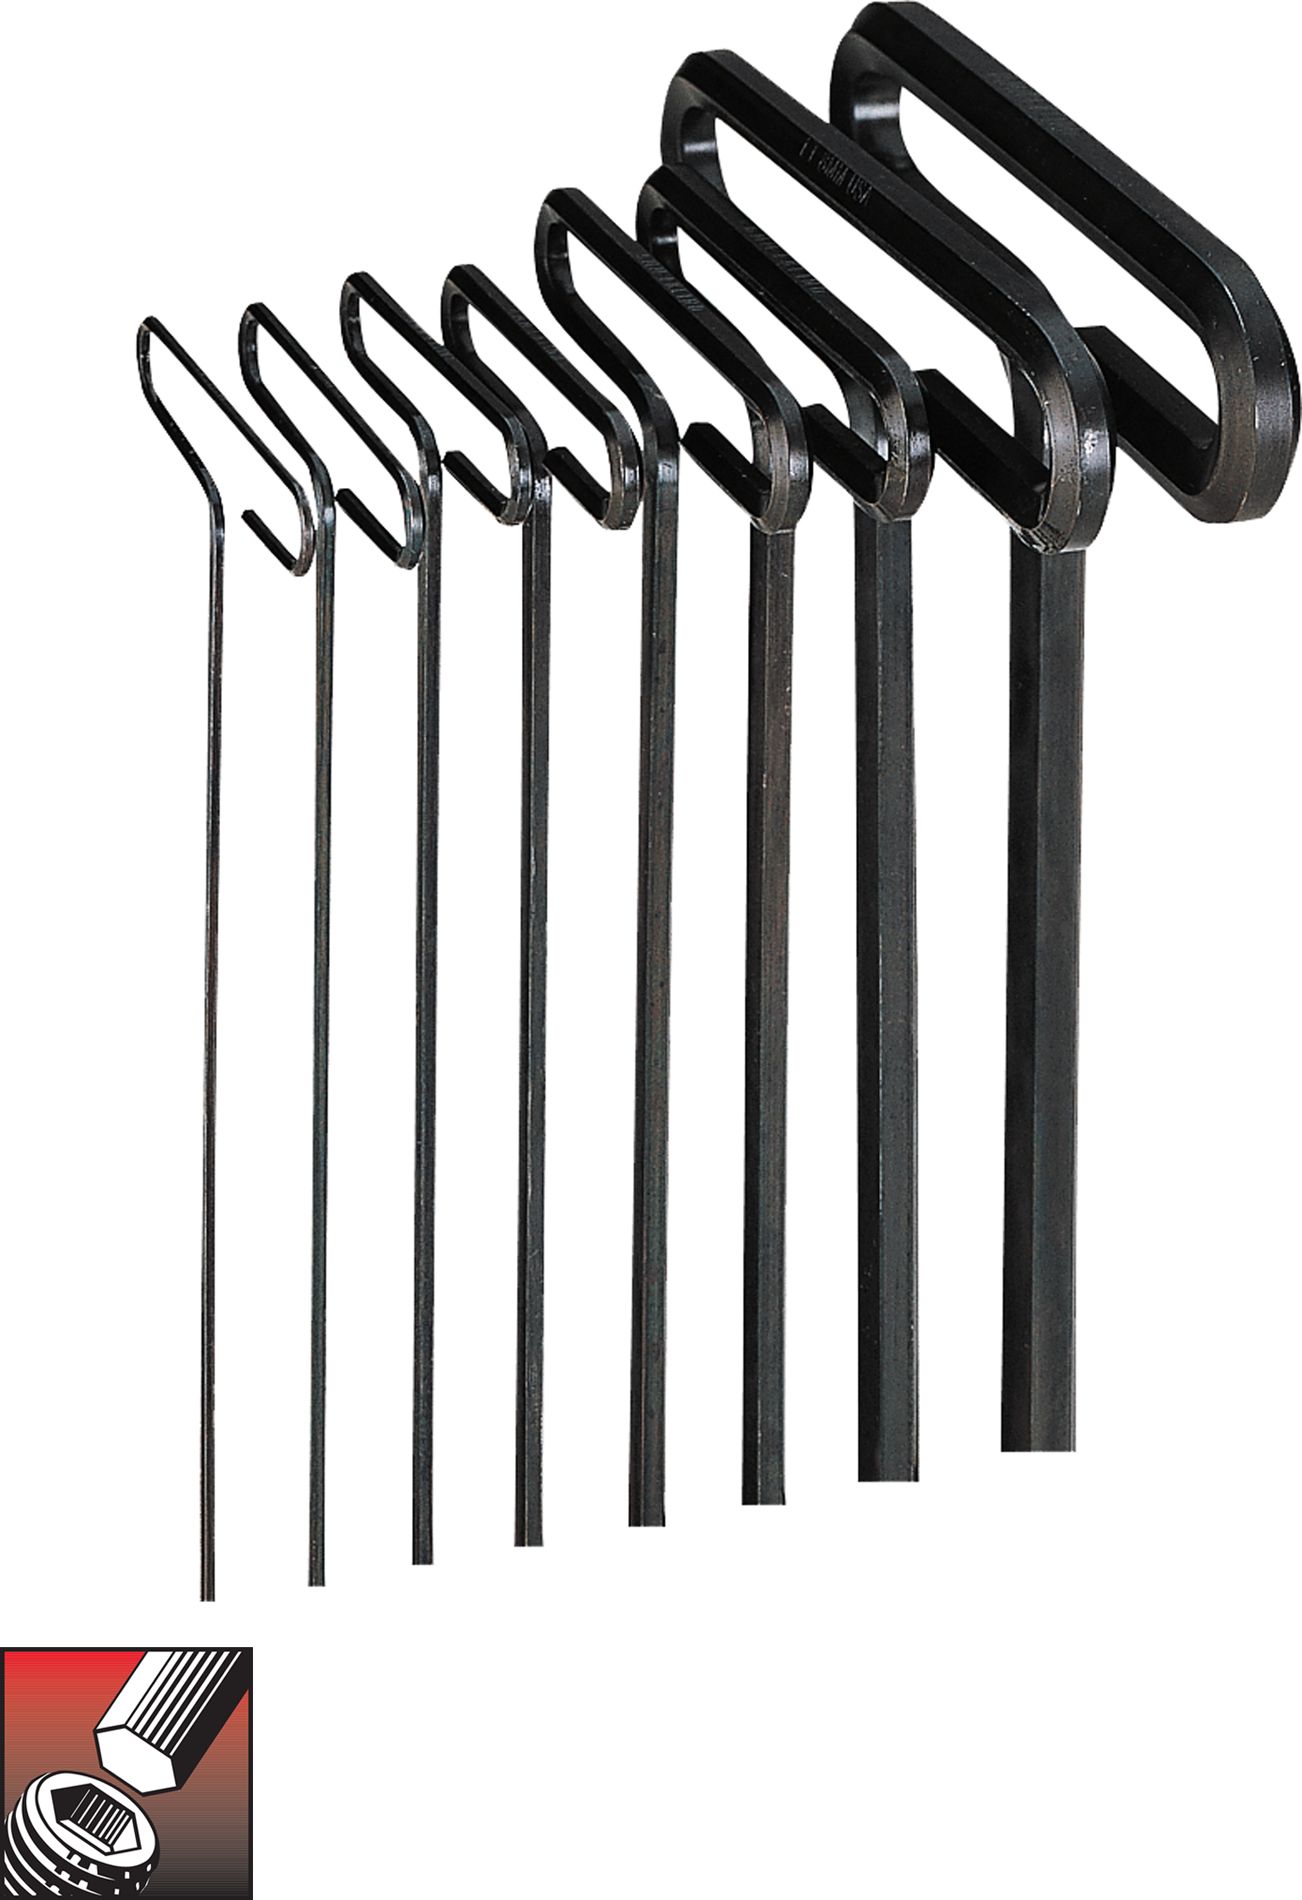 Eklind&#174 Standard Grip Hex T-Key Set, 6 inch Series, 8 keys: 3/32 to 1/4 Inch & Pouch